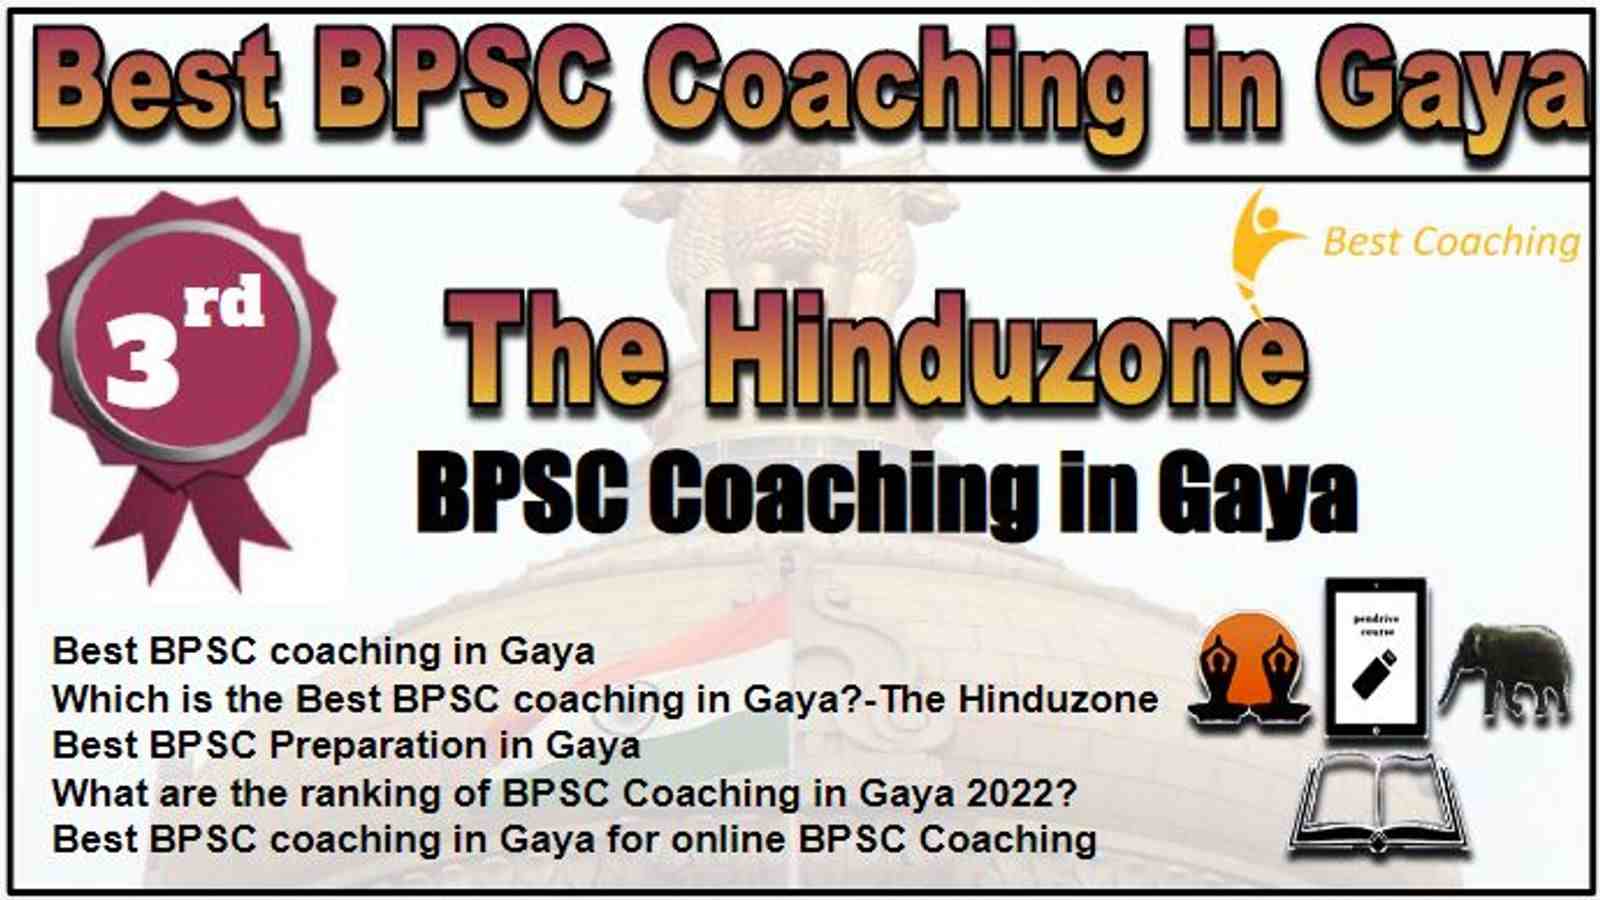 Rank 3 Best BPSC Coaching in Gaya